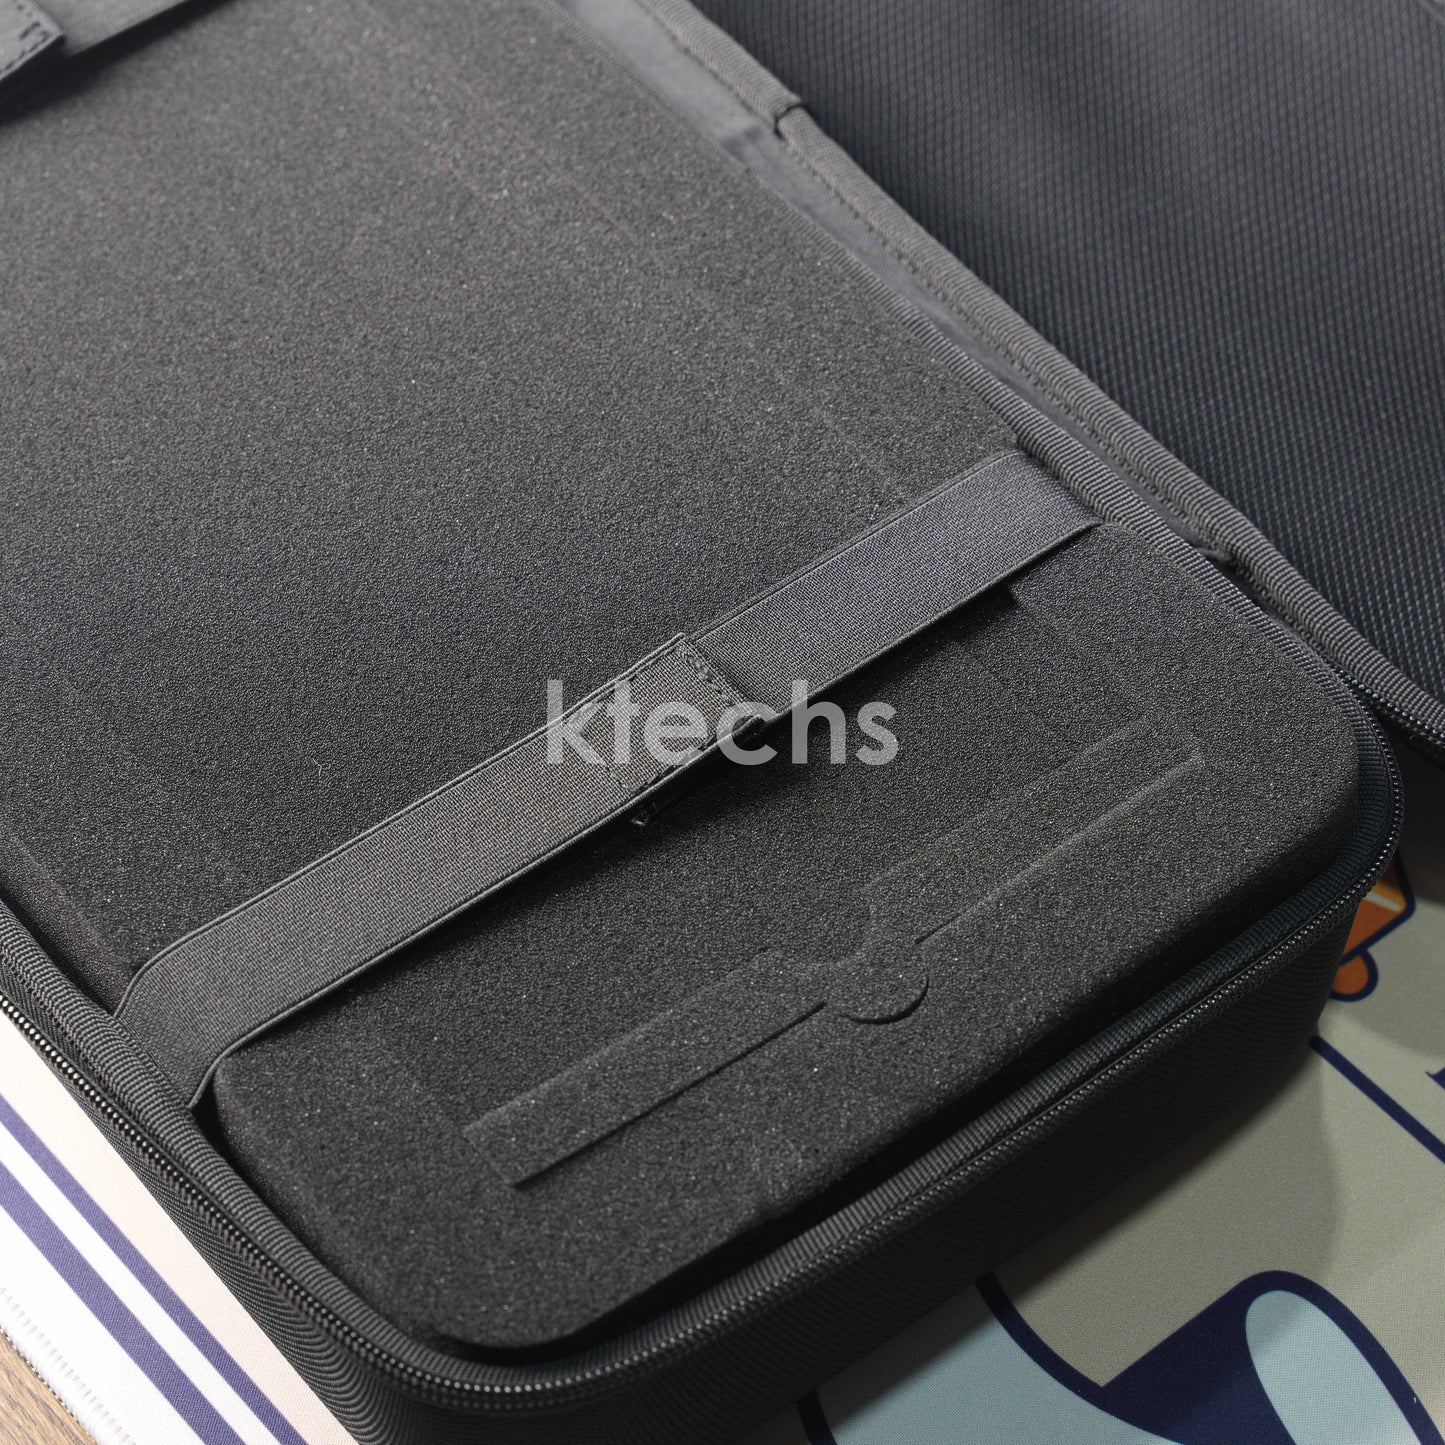 ktechs keyboard carrying case